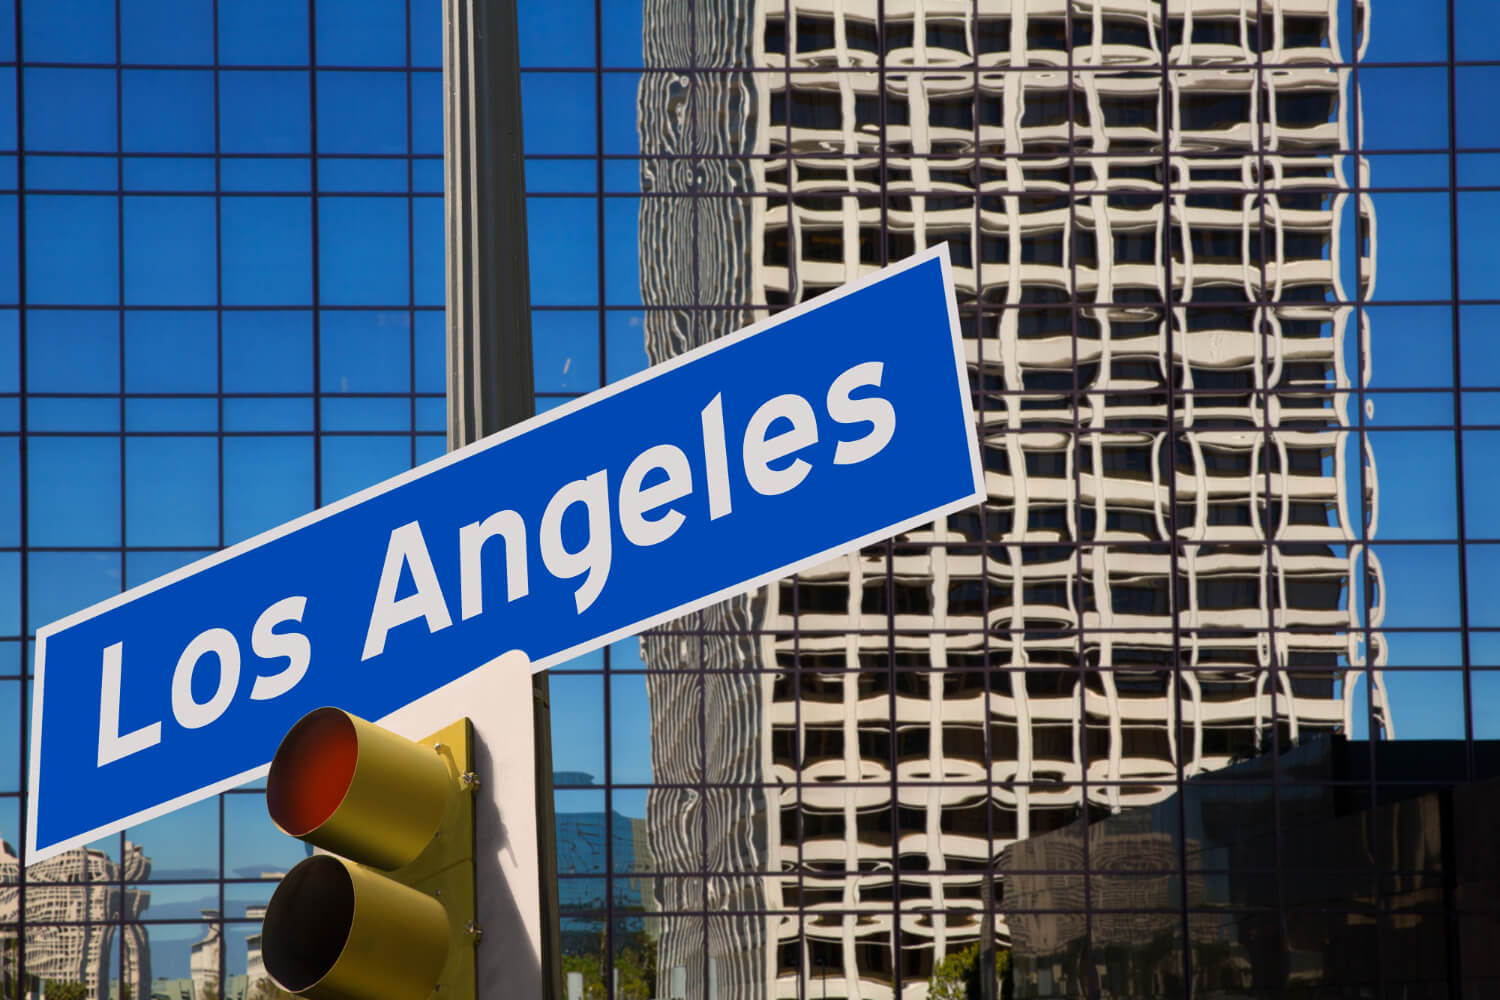 Los Angeles road sign